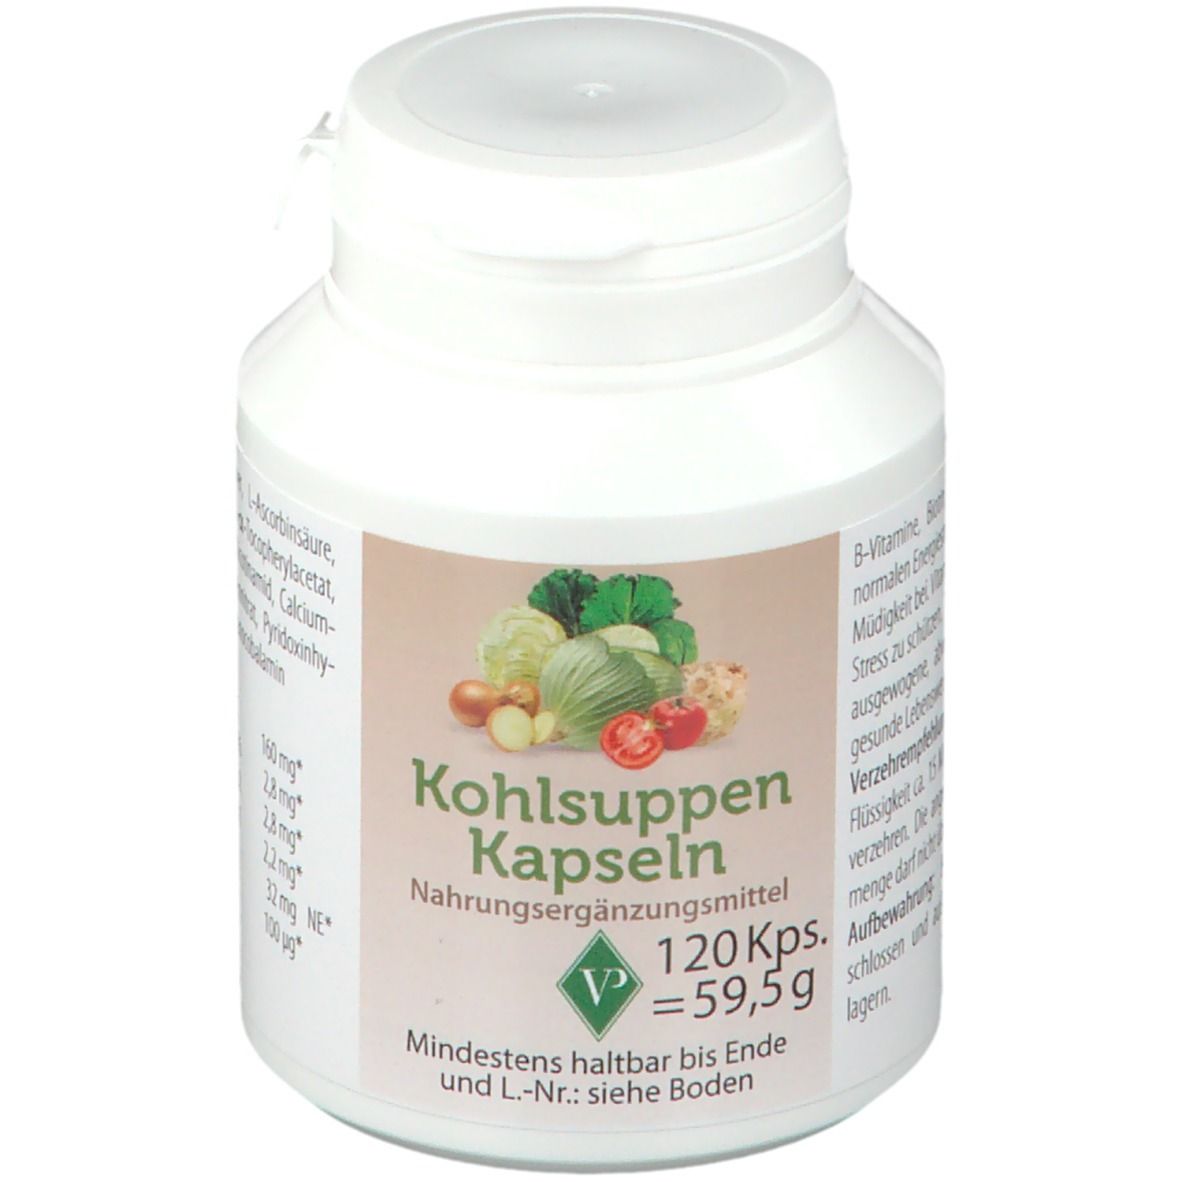 Image of Kohlsuppen Kapseln